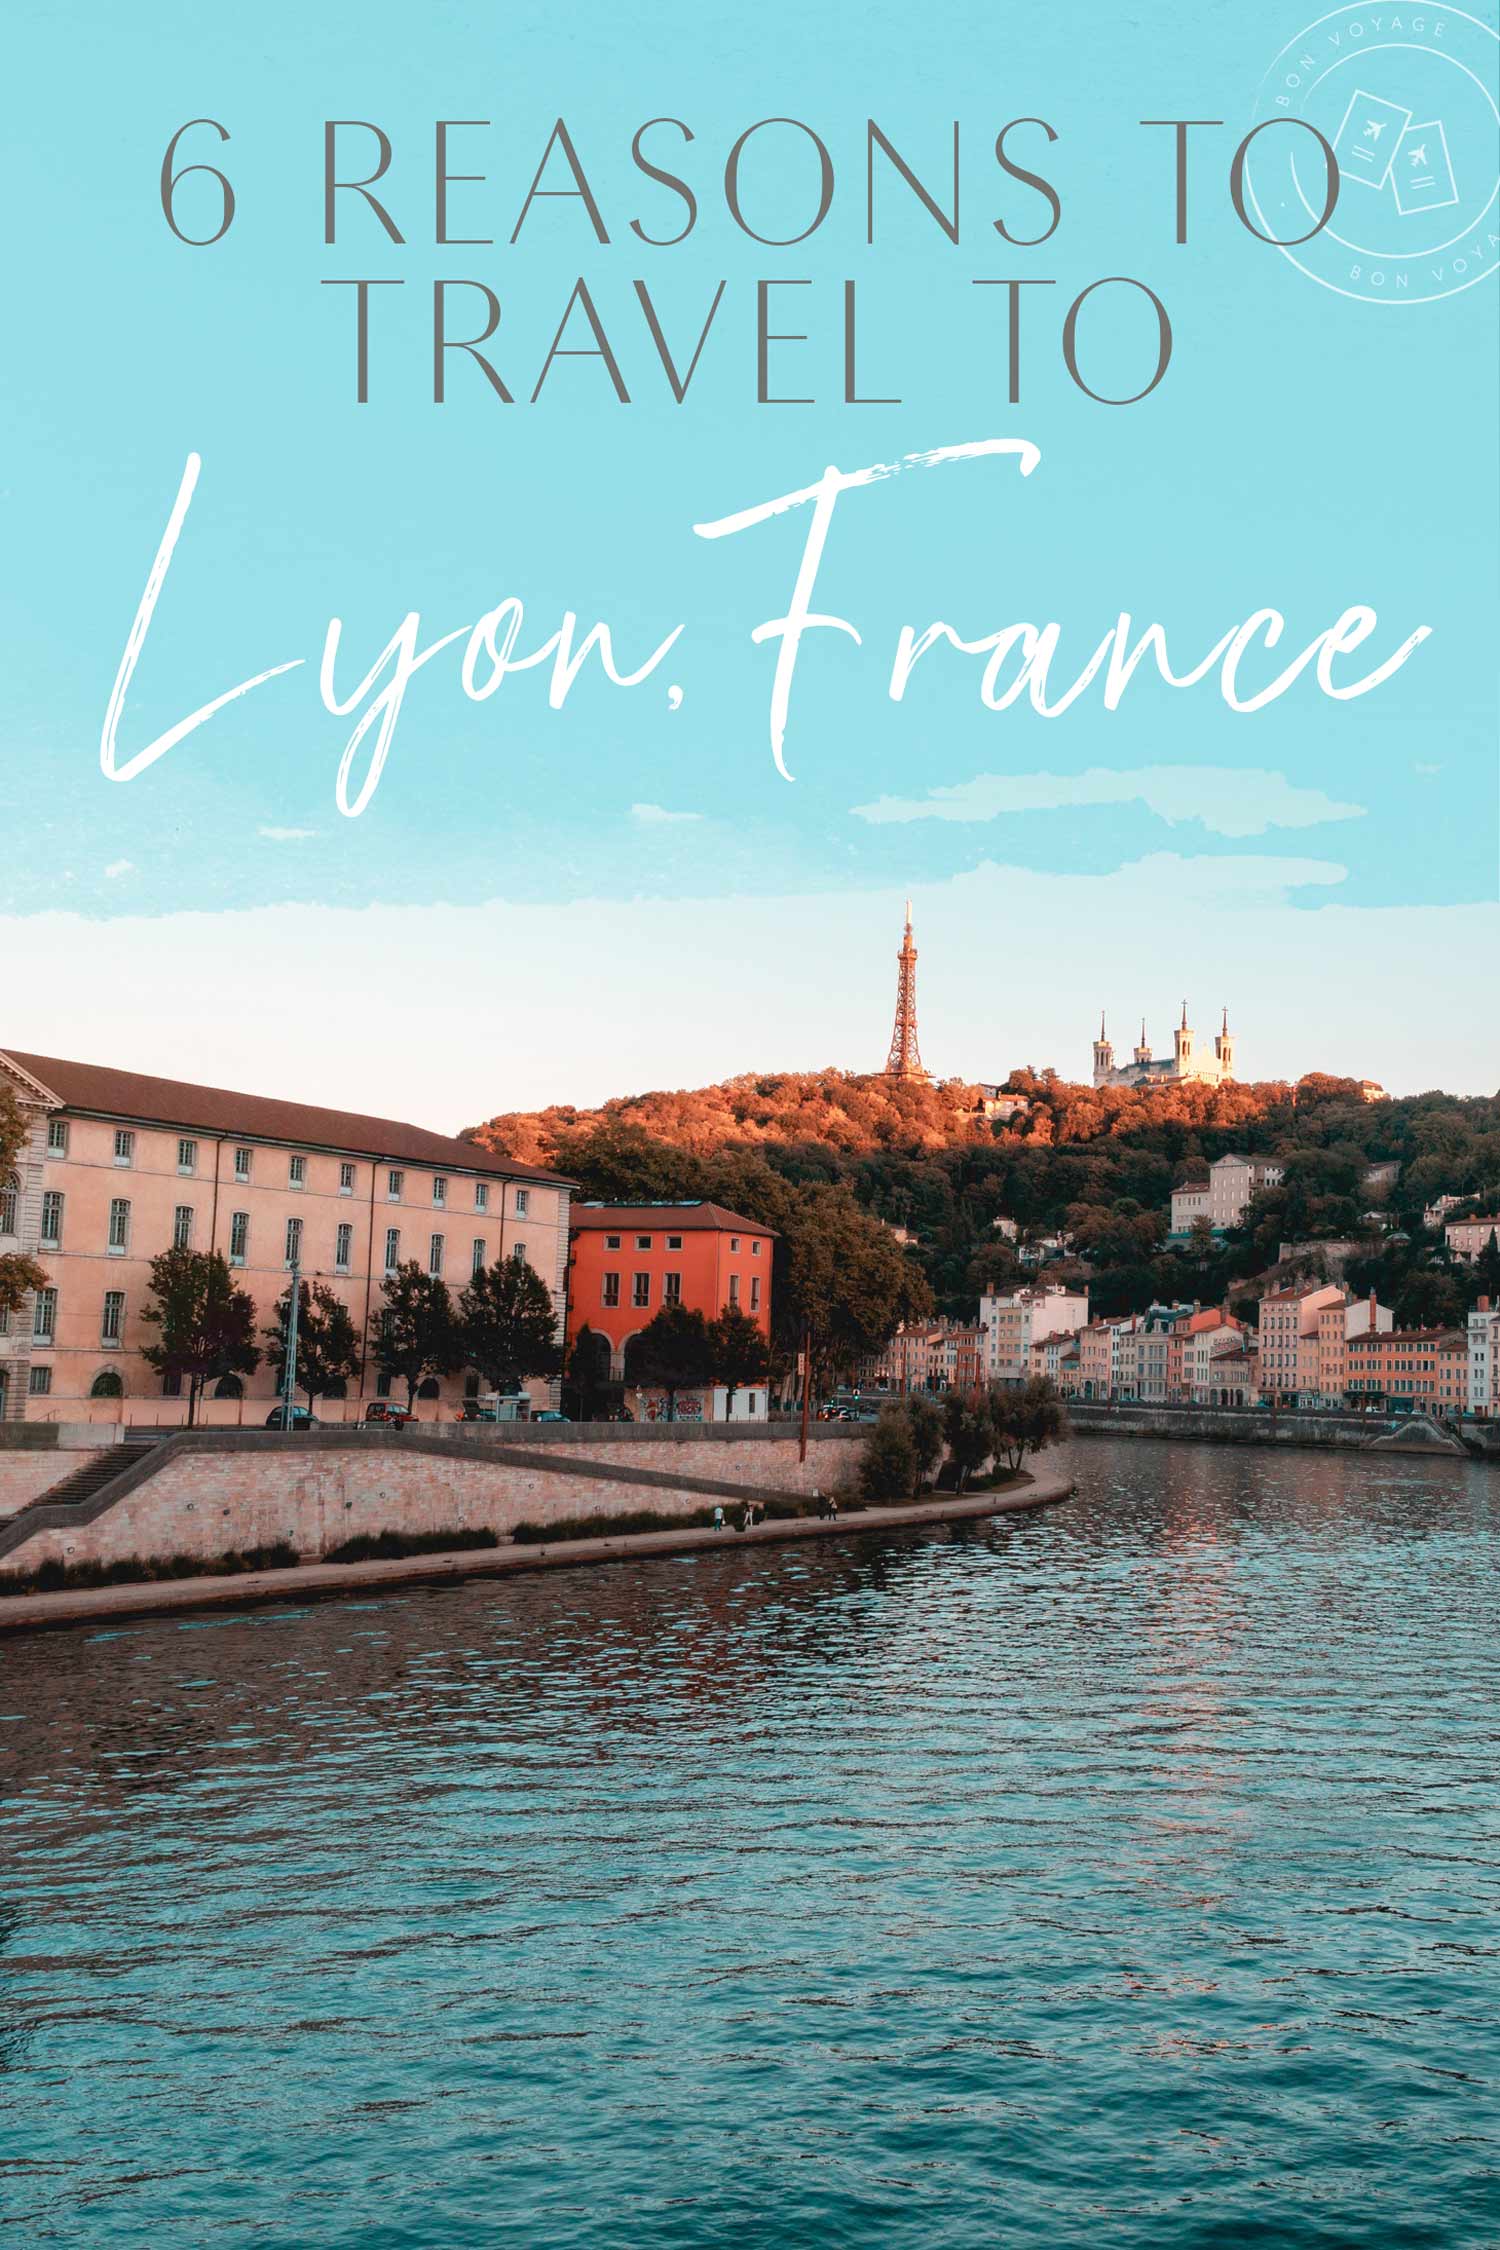 6 reasons to visit lyon, france